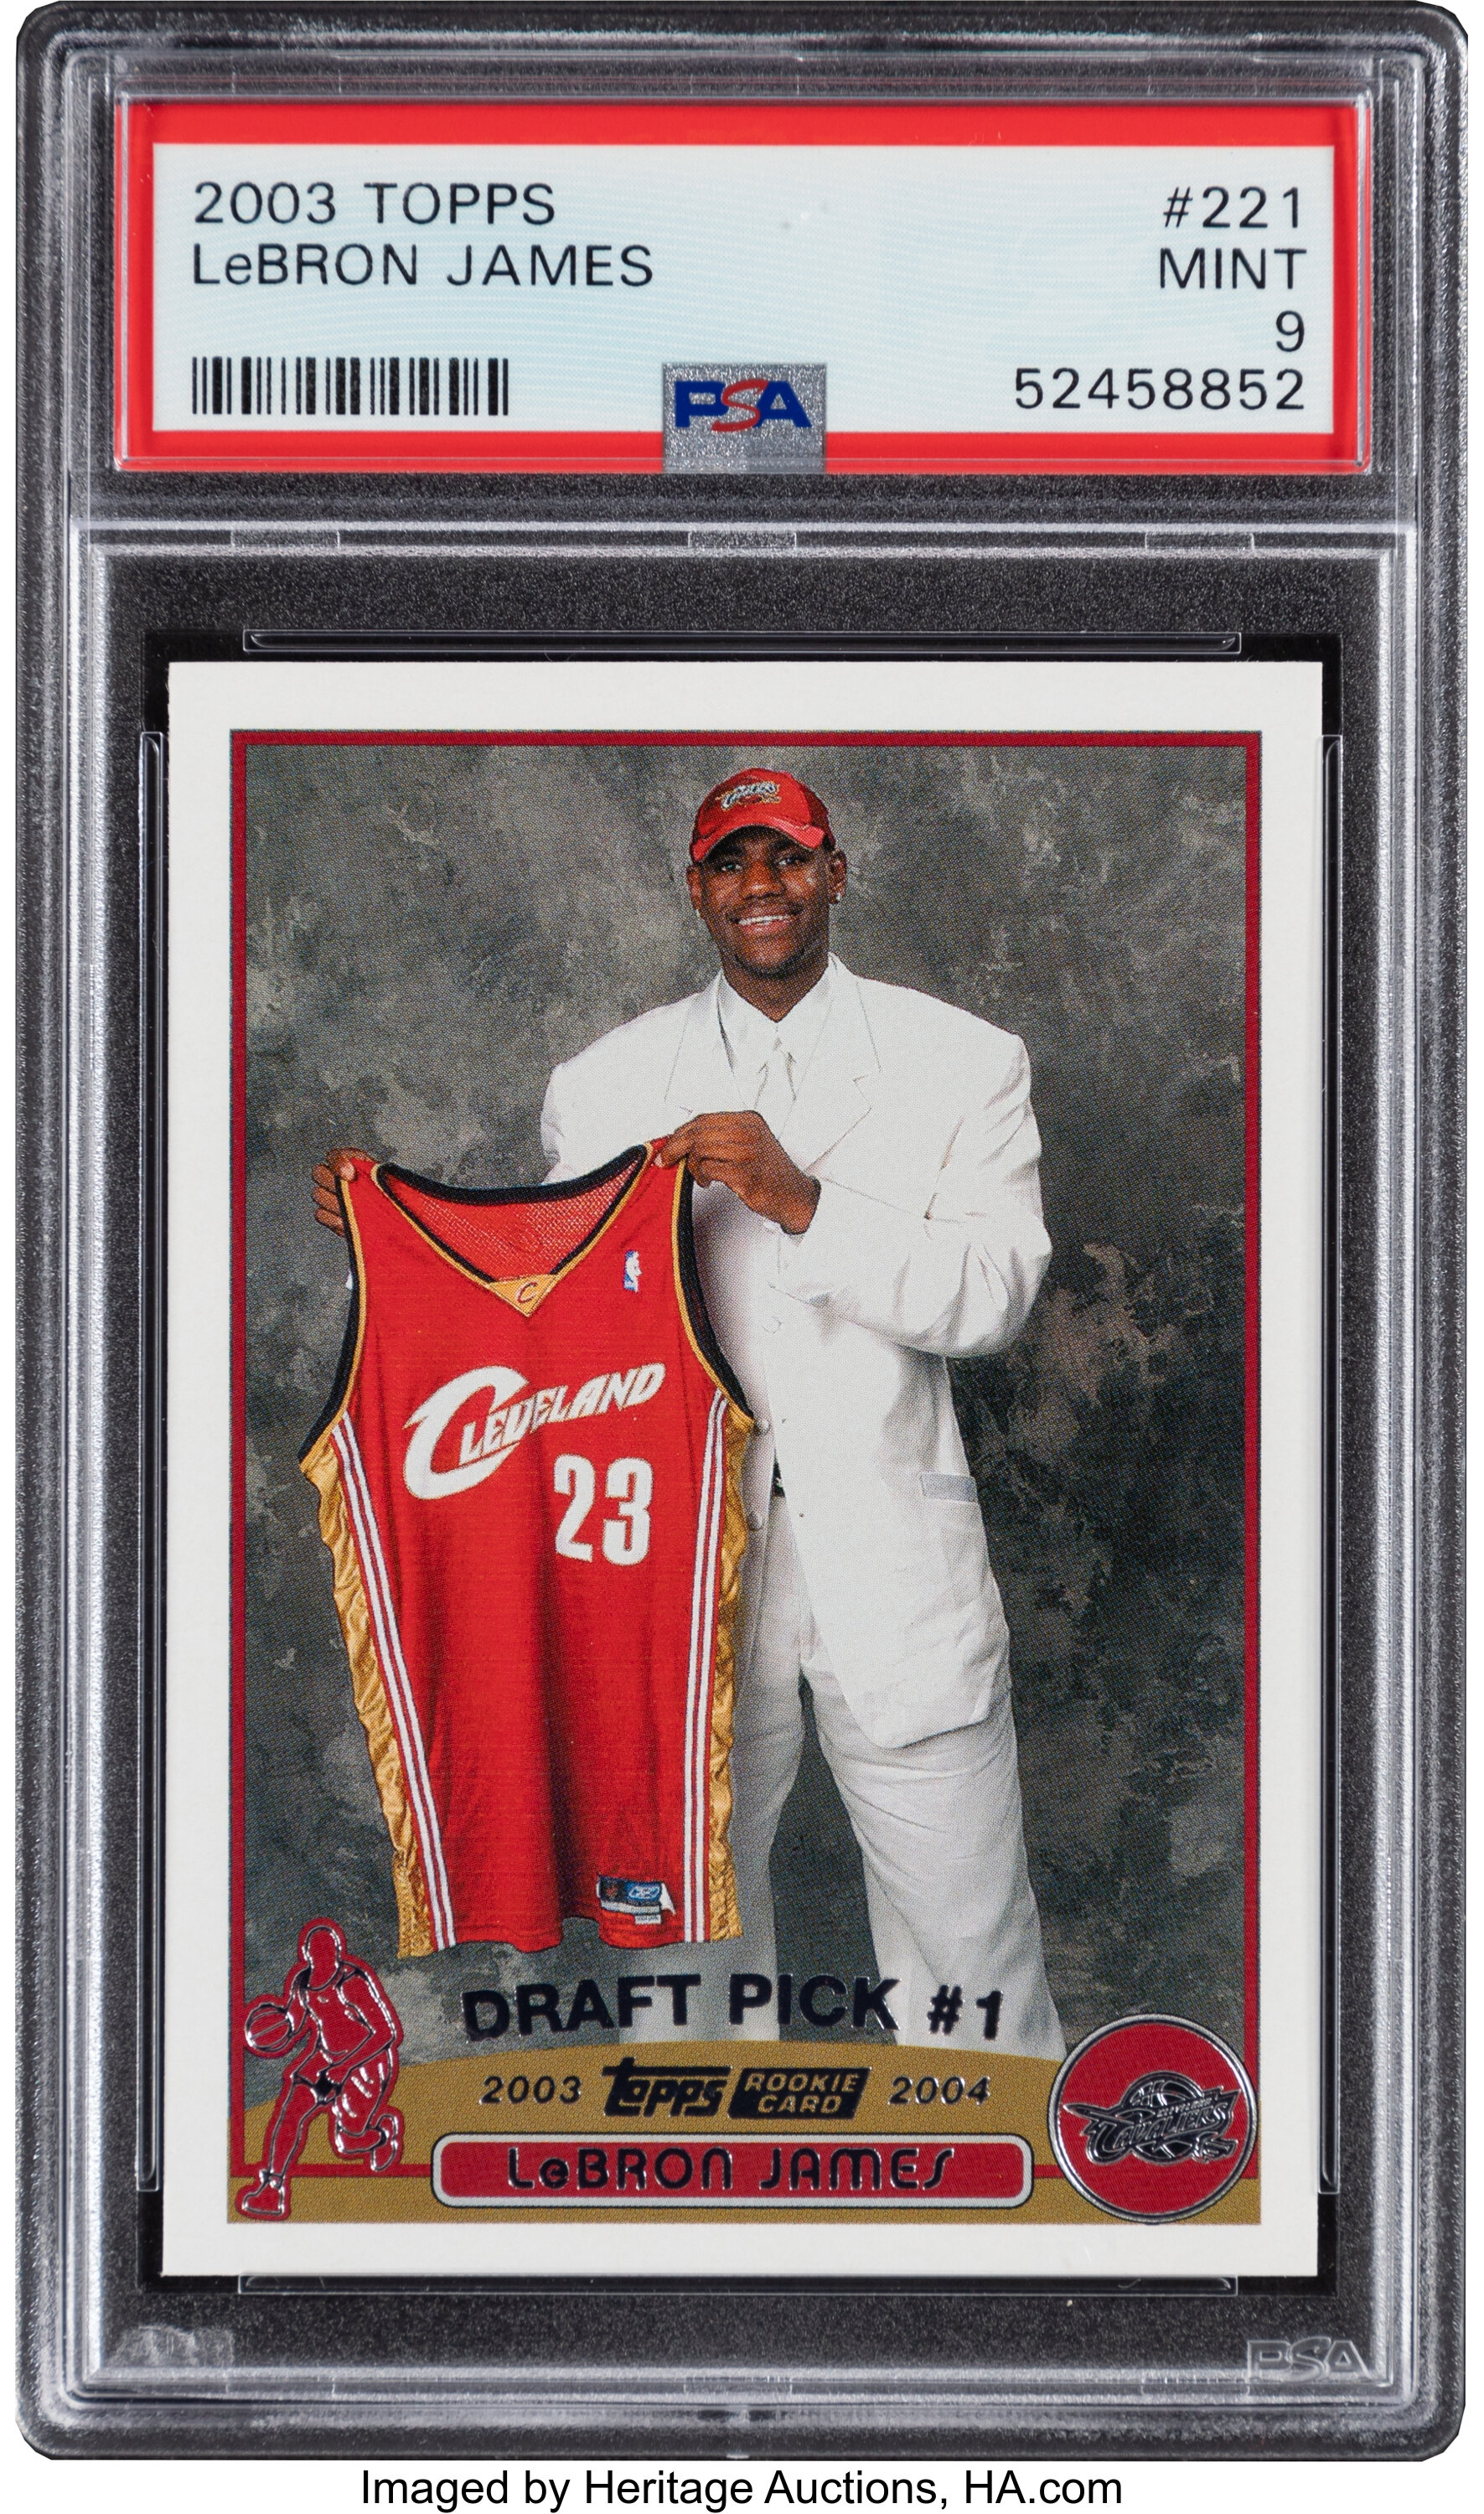 2003 Topps LeBron James Rookie Card # 221 Draft Pick #1 PSA 9 🏀